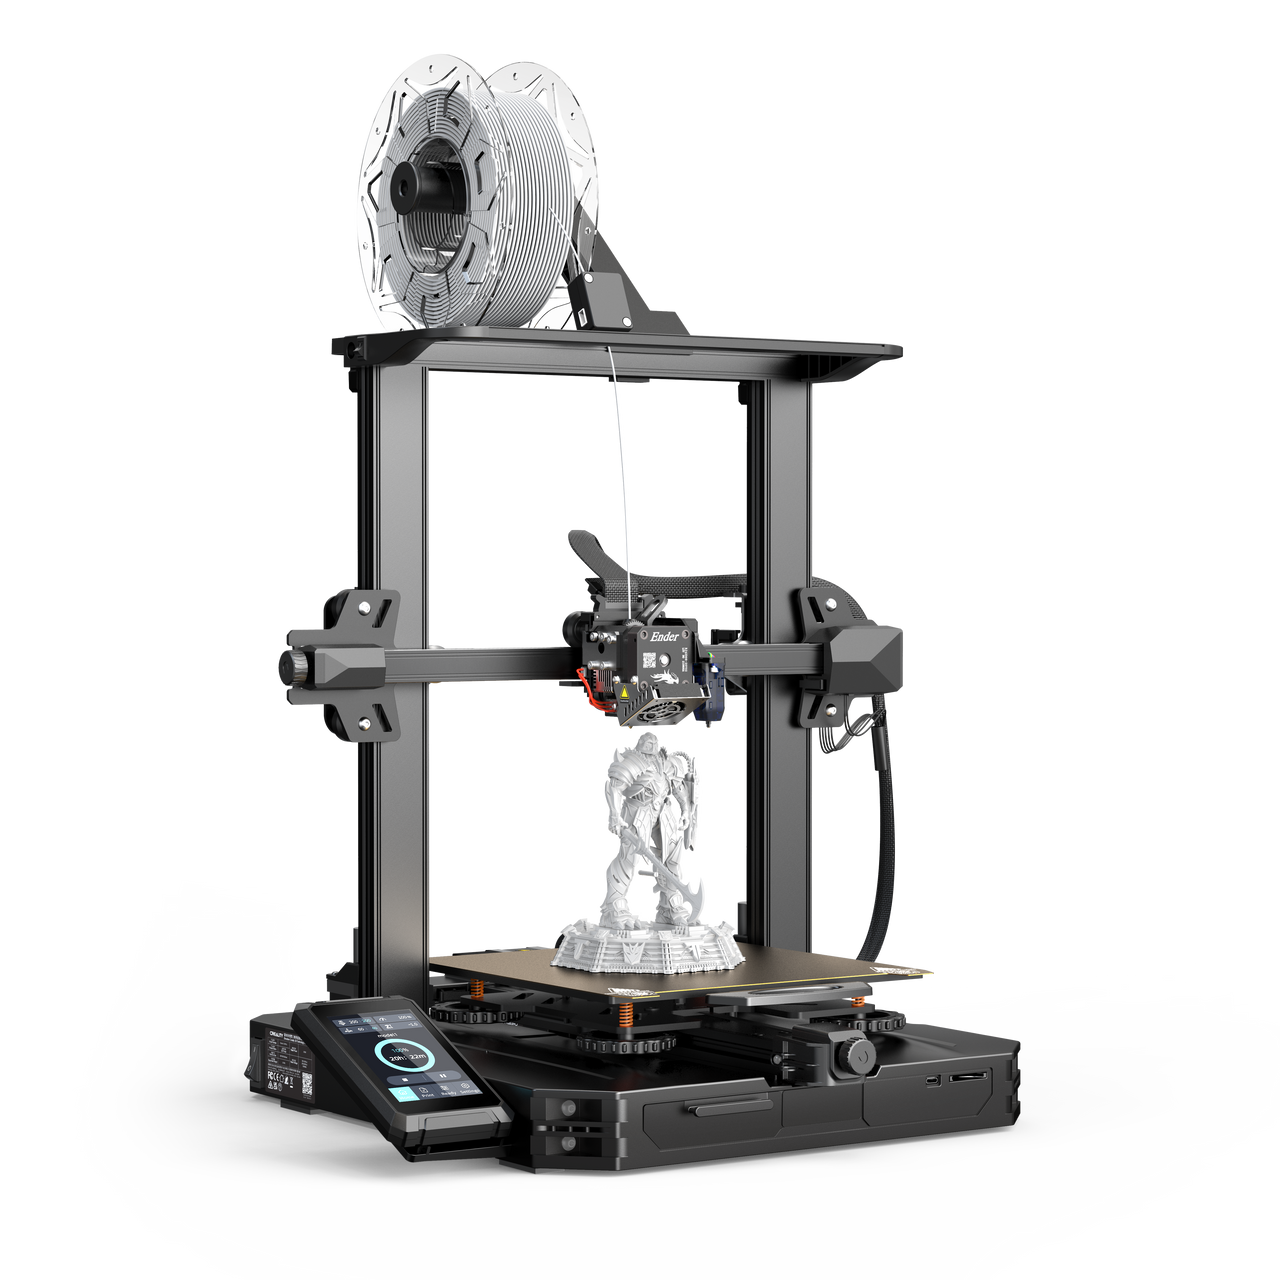 Ender 3 S1 Pro 3D Printer.